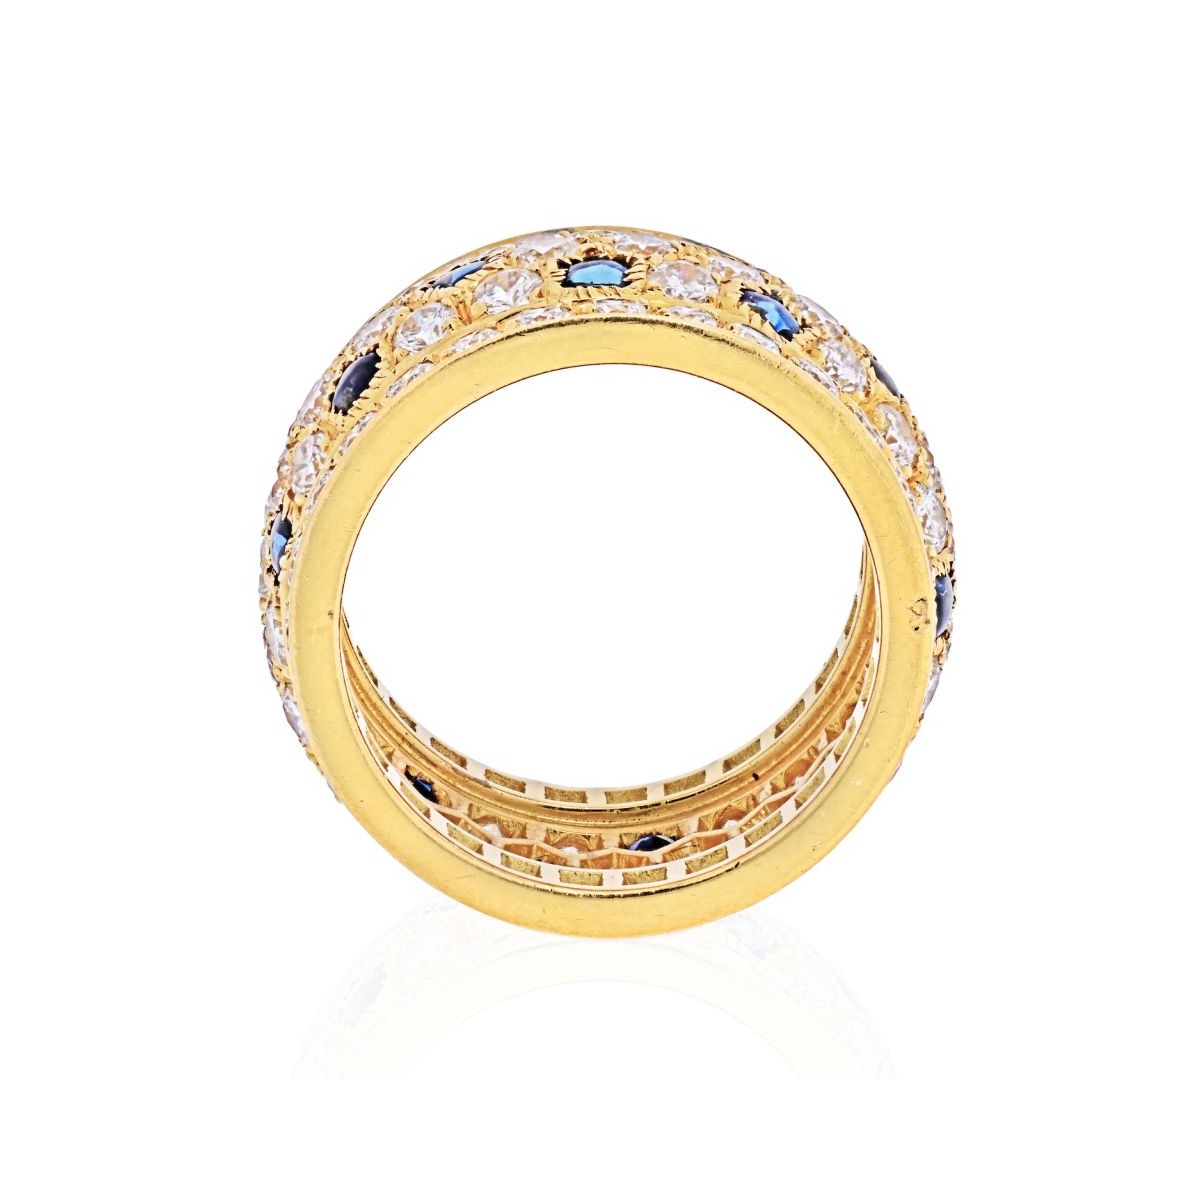 Cartier Diamond, Sapphire and 18K Ring